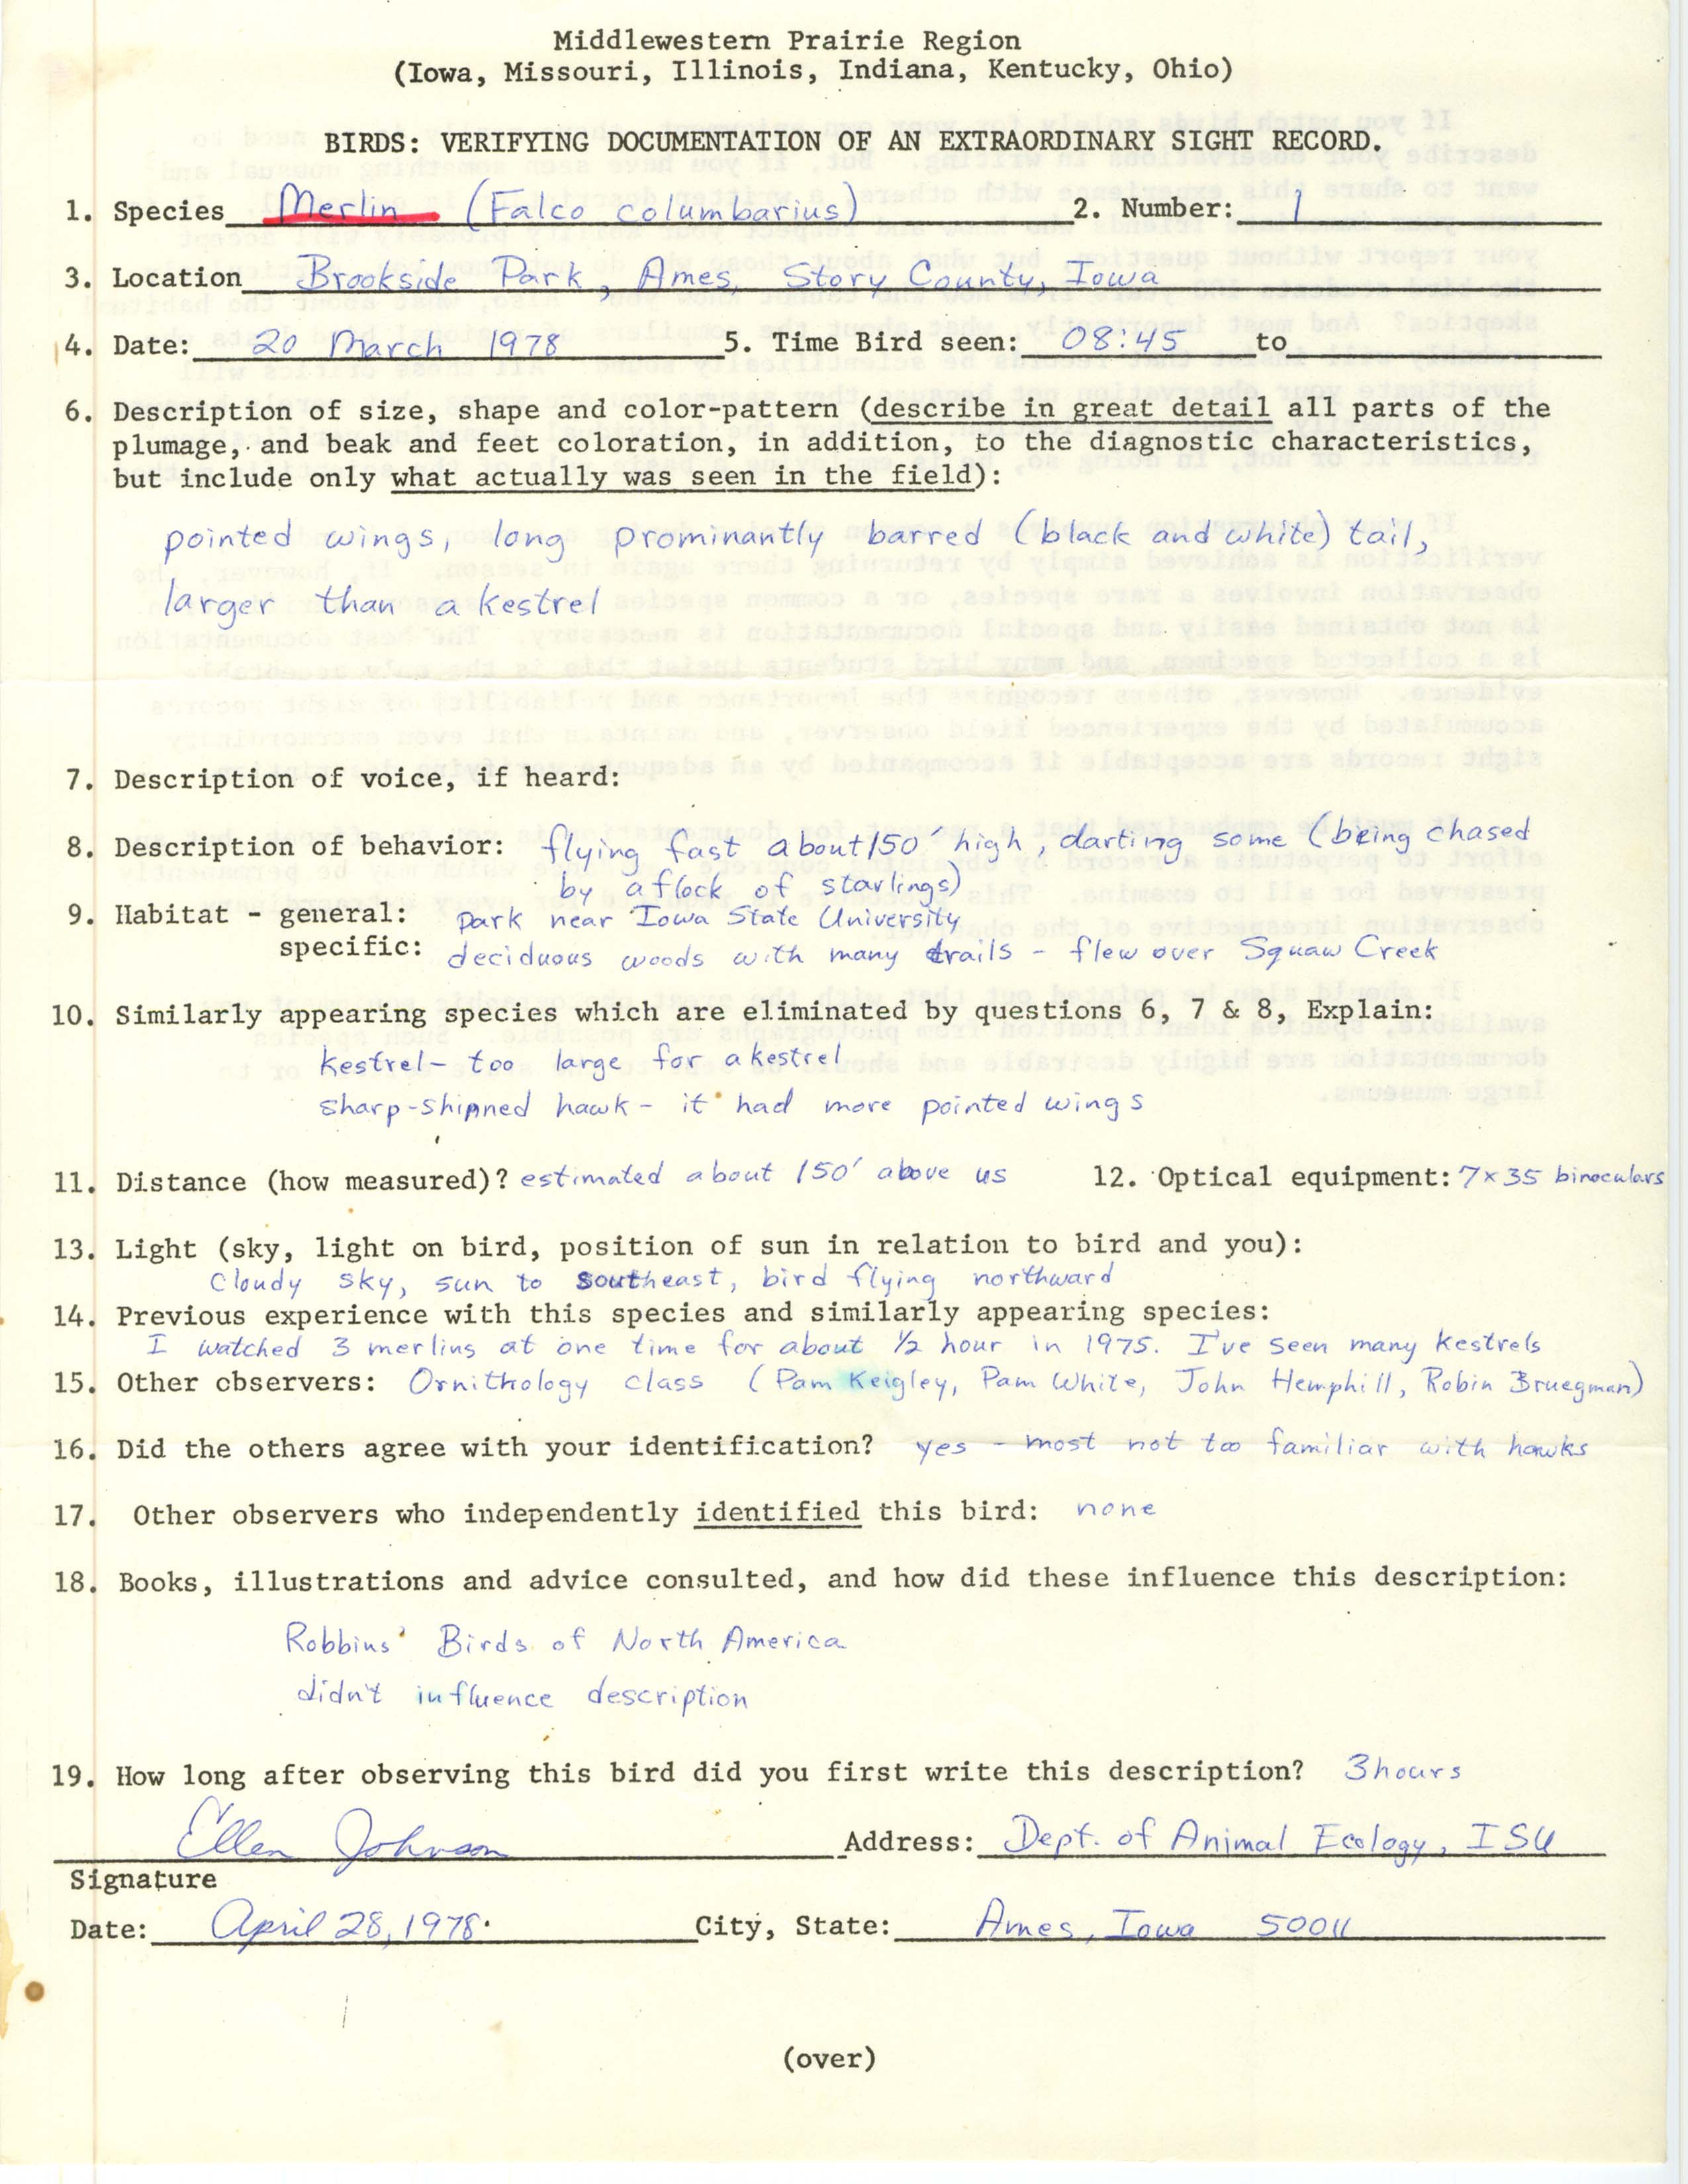 Rare bird documentation form for Merlin at Brookside Park, 1978